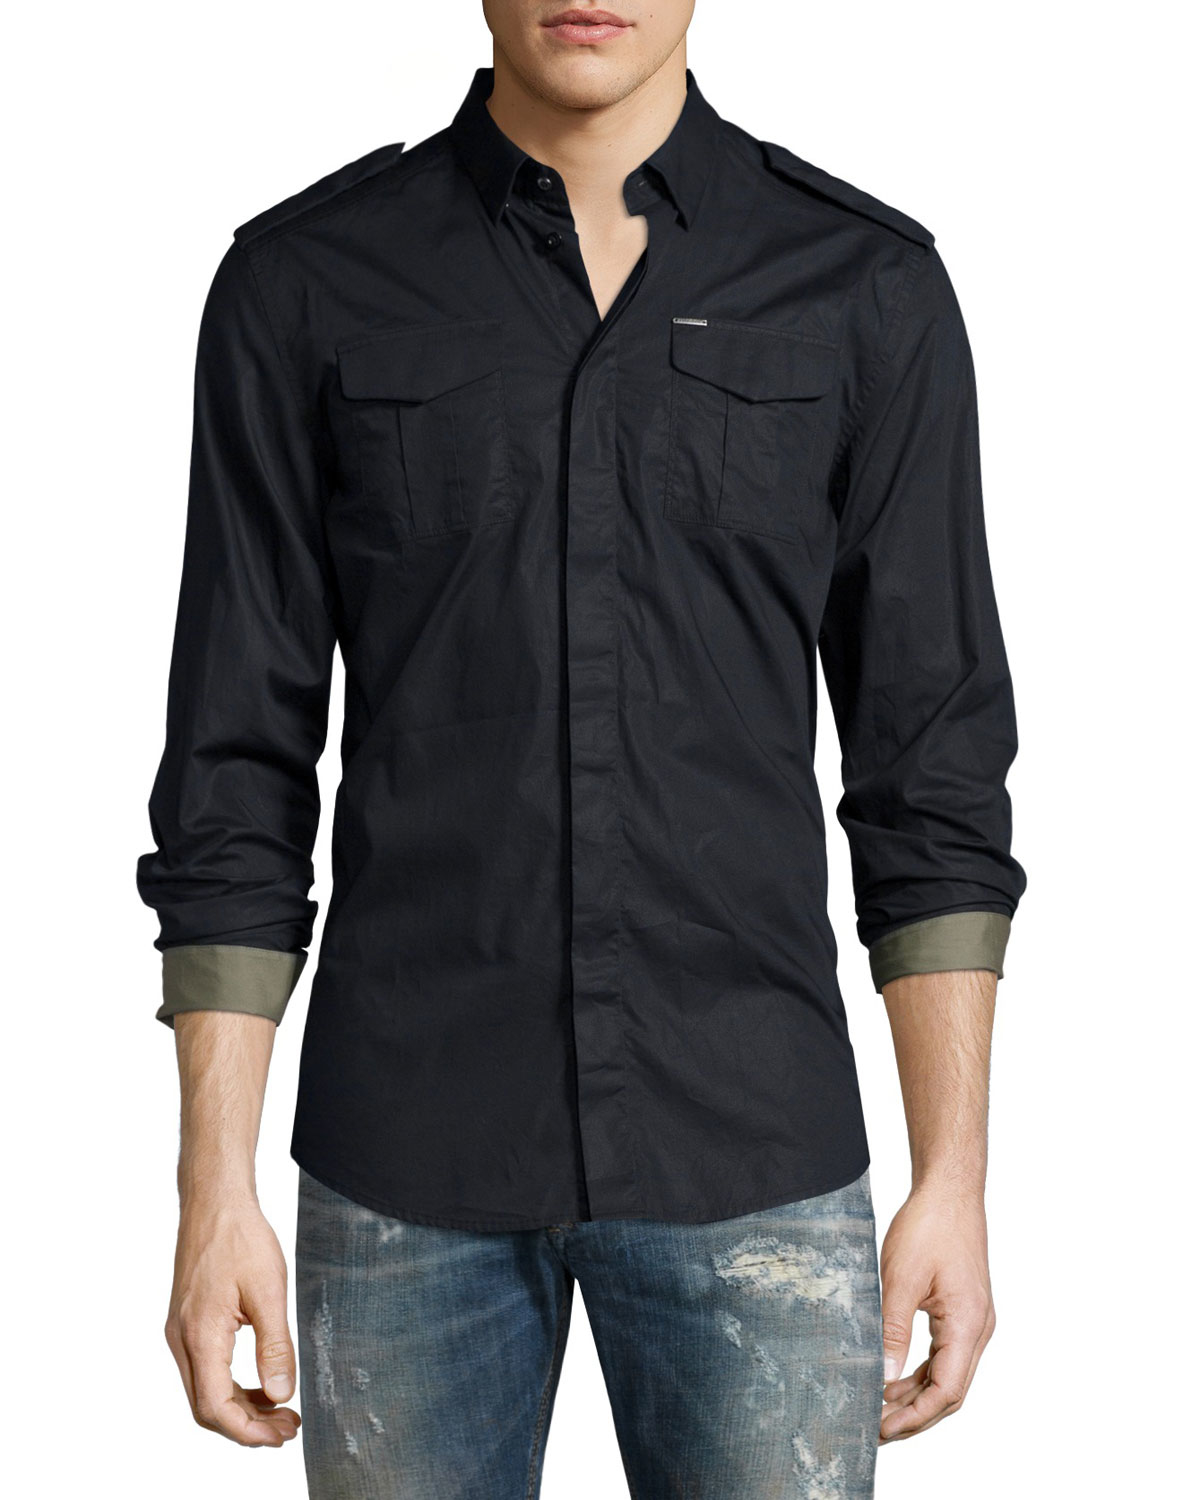 Lyst - Diesel S-haul Long-sleeve Military Shirt in Black for Men1200 x 1500